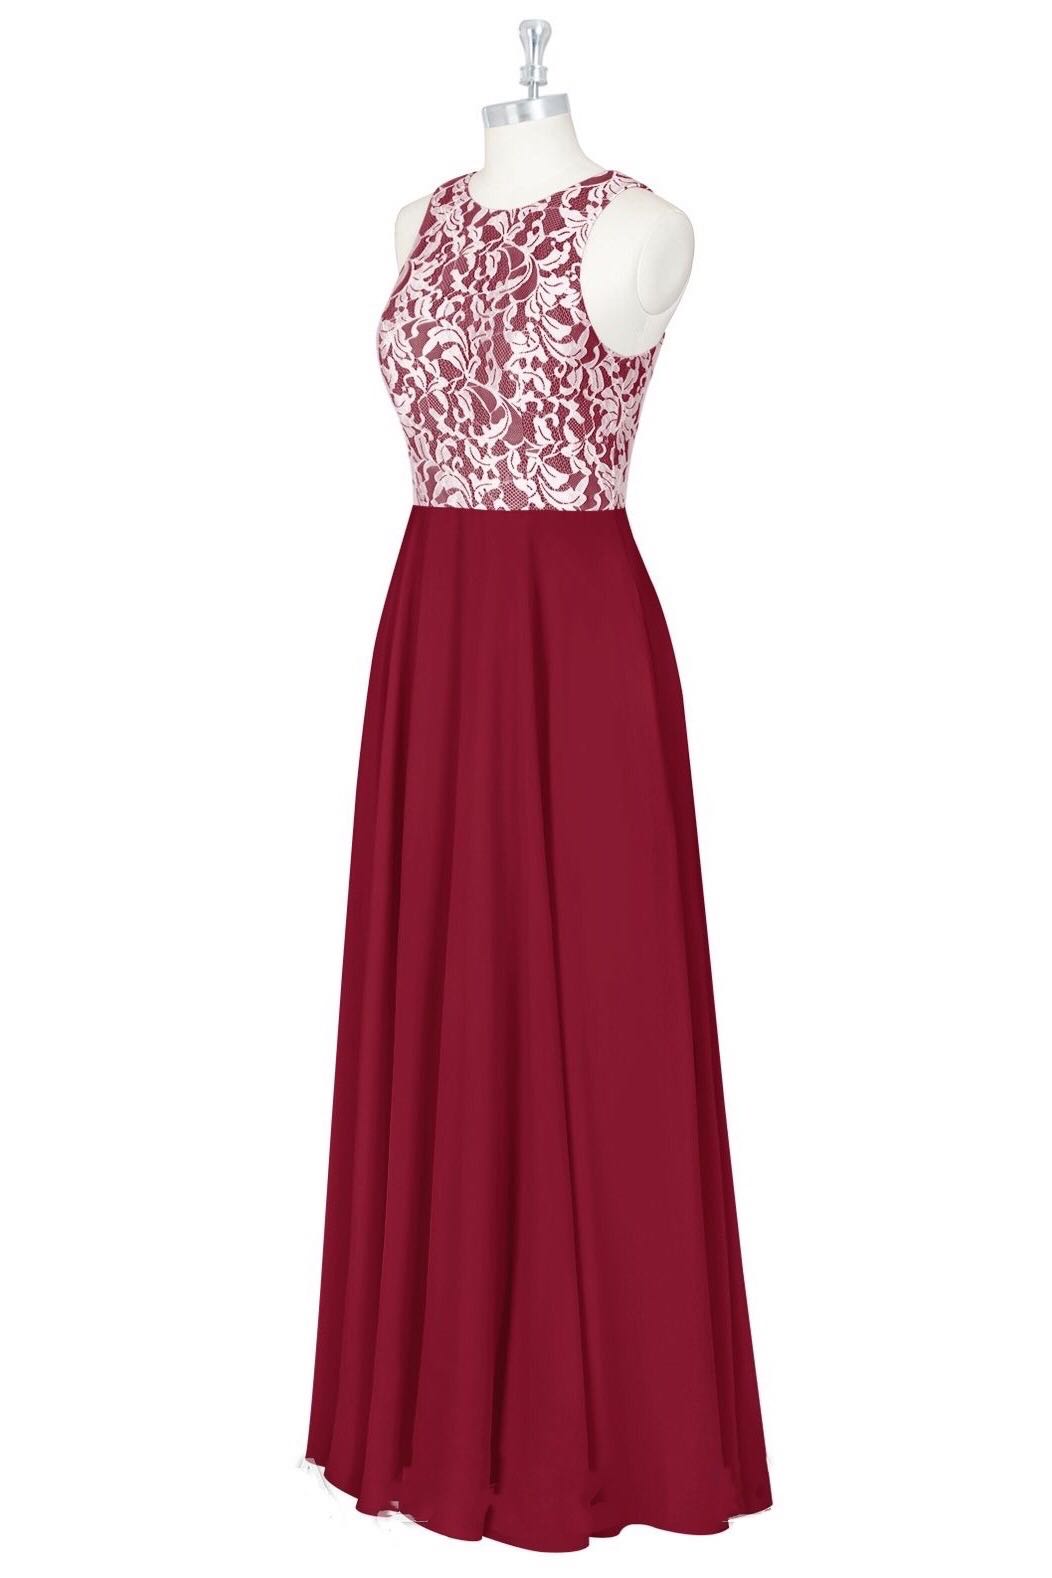 Red Print Sleeveless A-Line Long Bridesmaid Dress